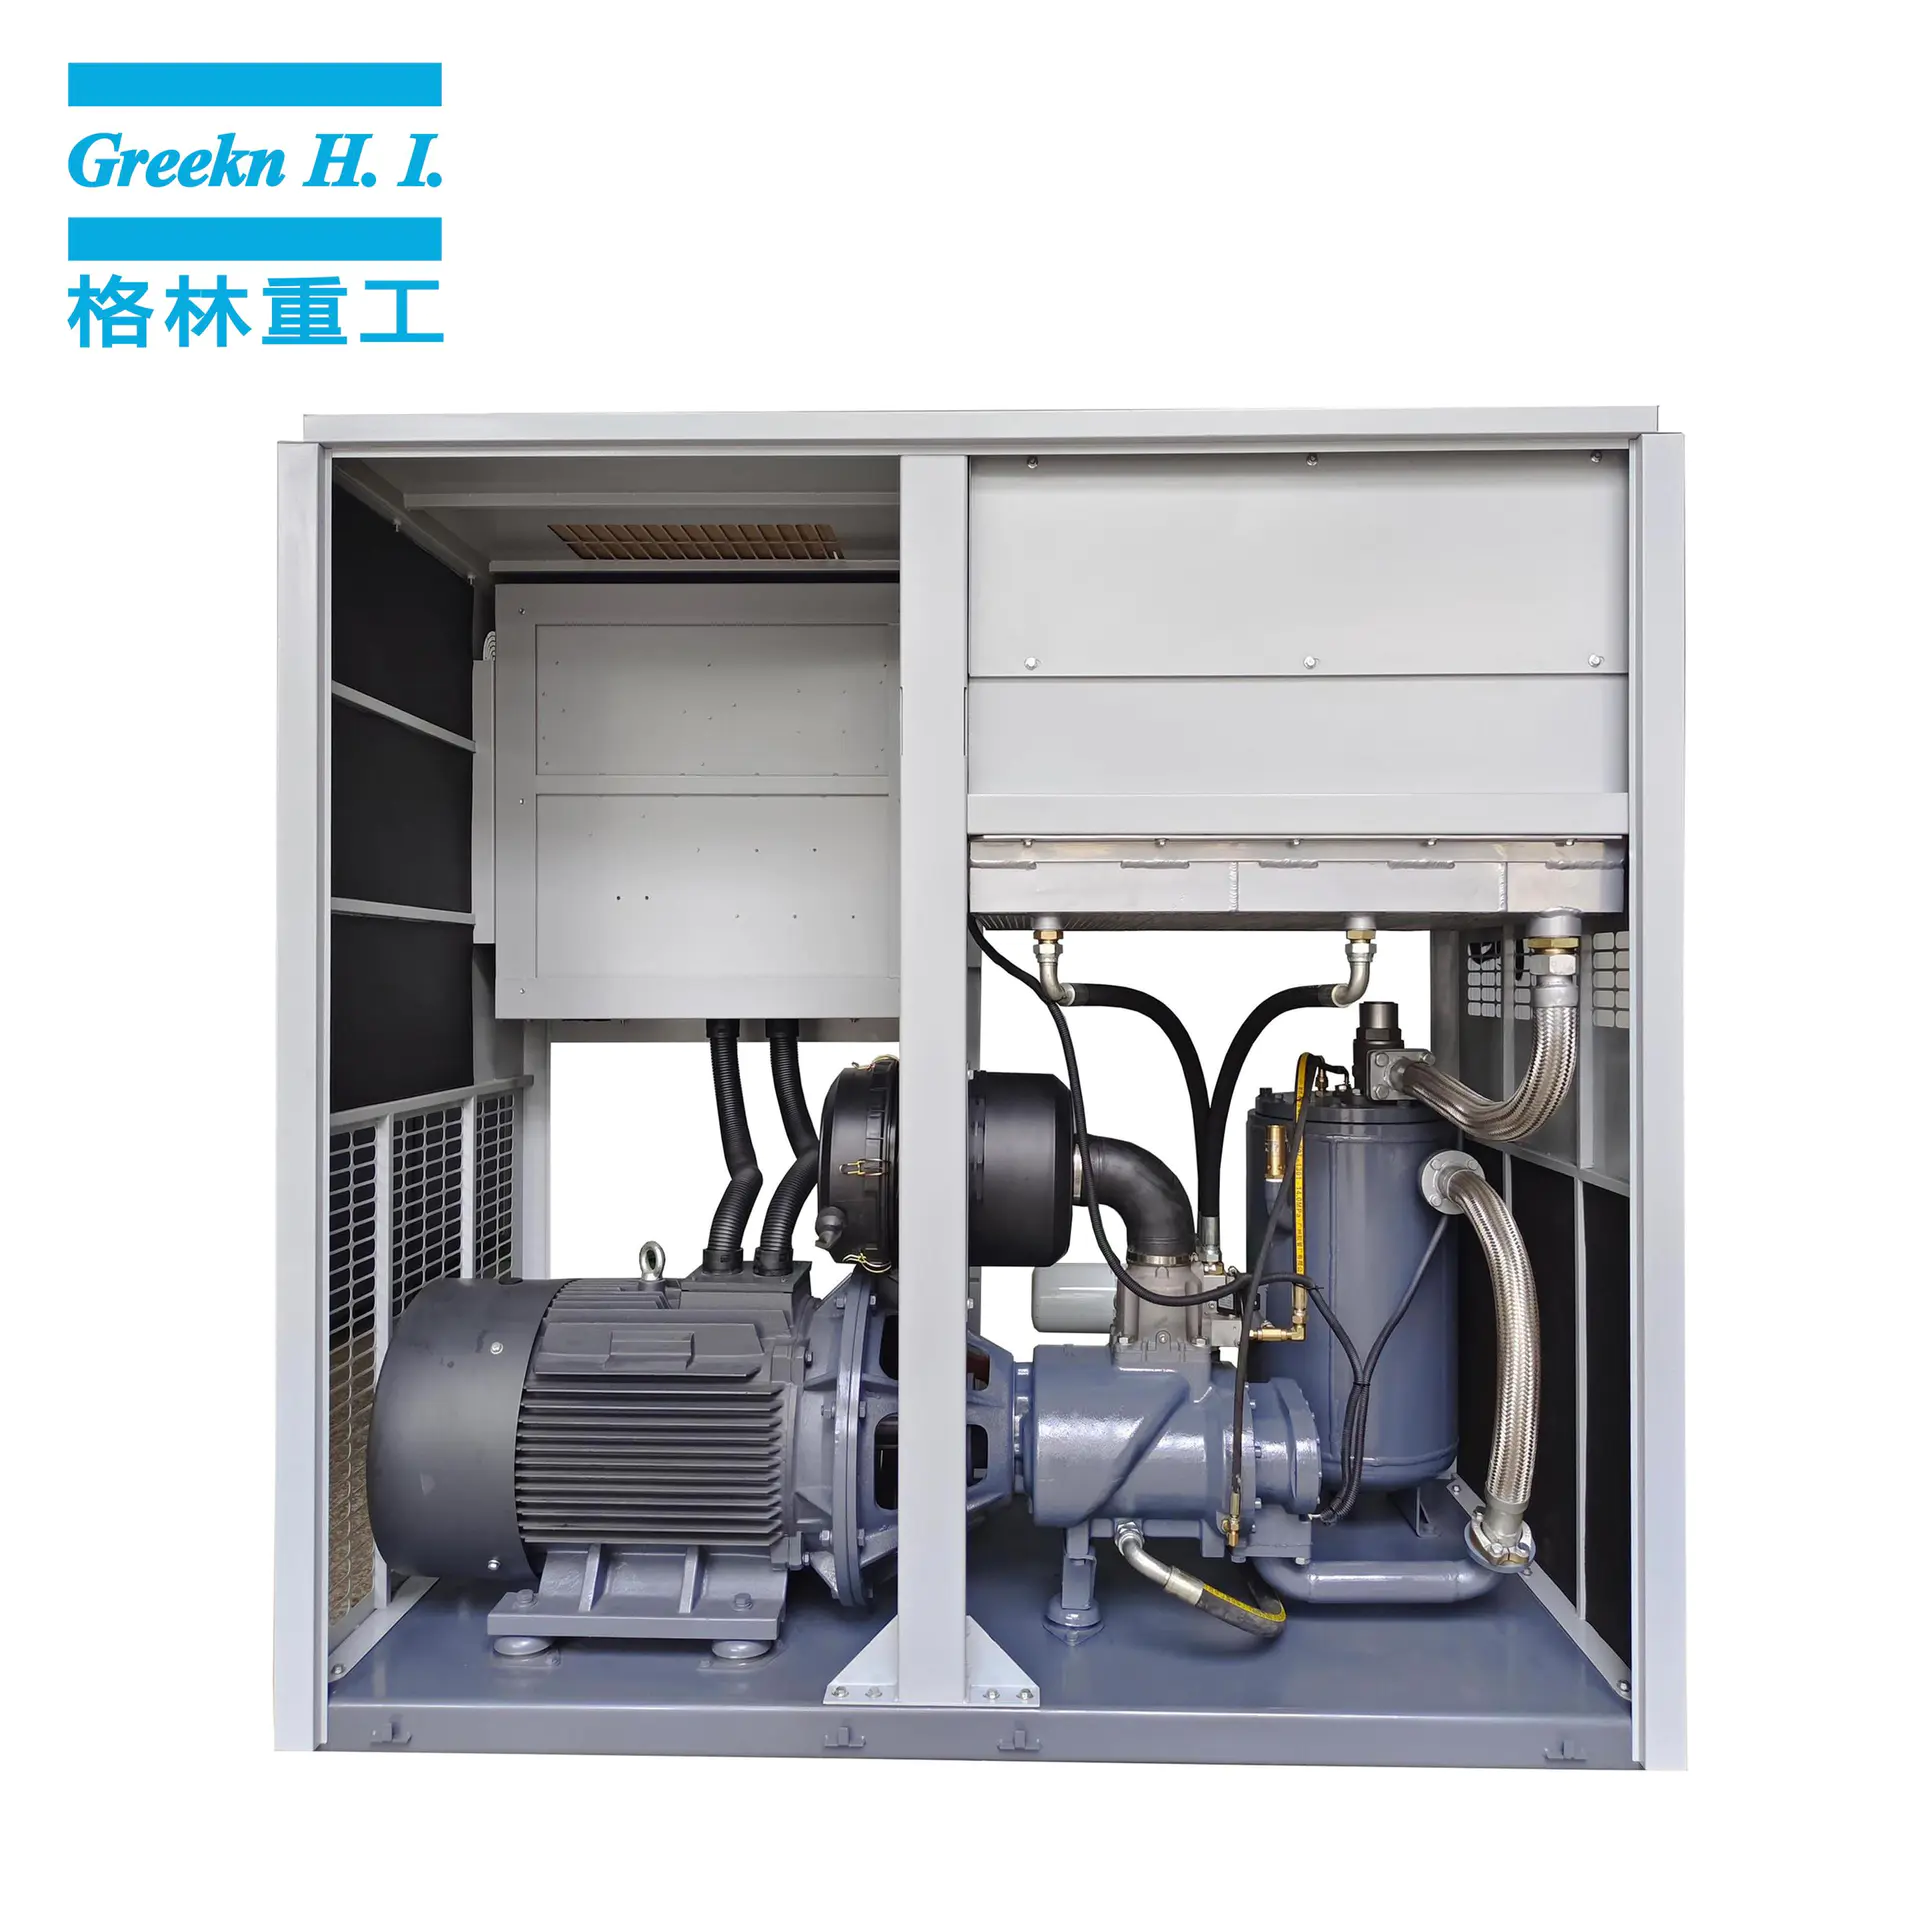 Greenair GA75 Electrical Oil Injected Stationary Screw Air Compressor